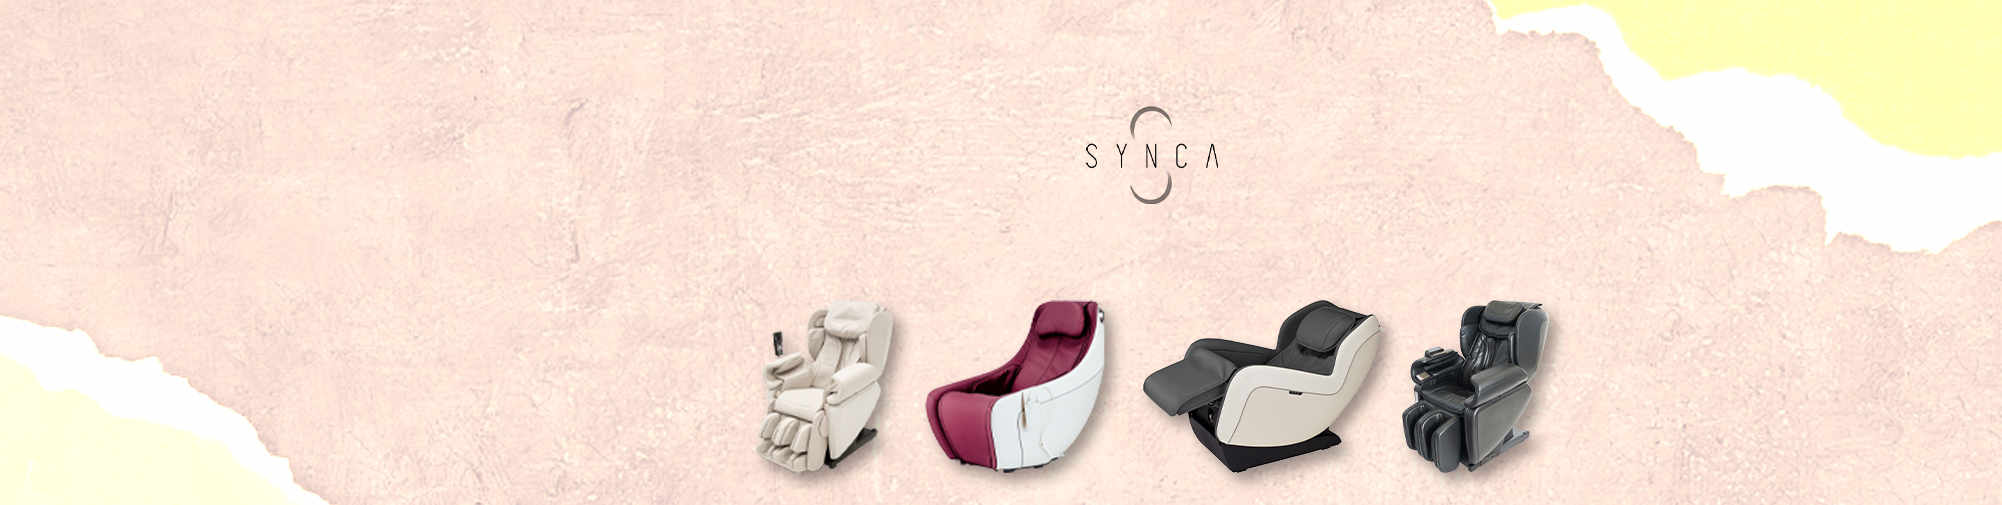 SYNCA - 获奖的保健品生产商 | 按摩椅世界